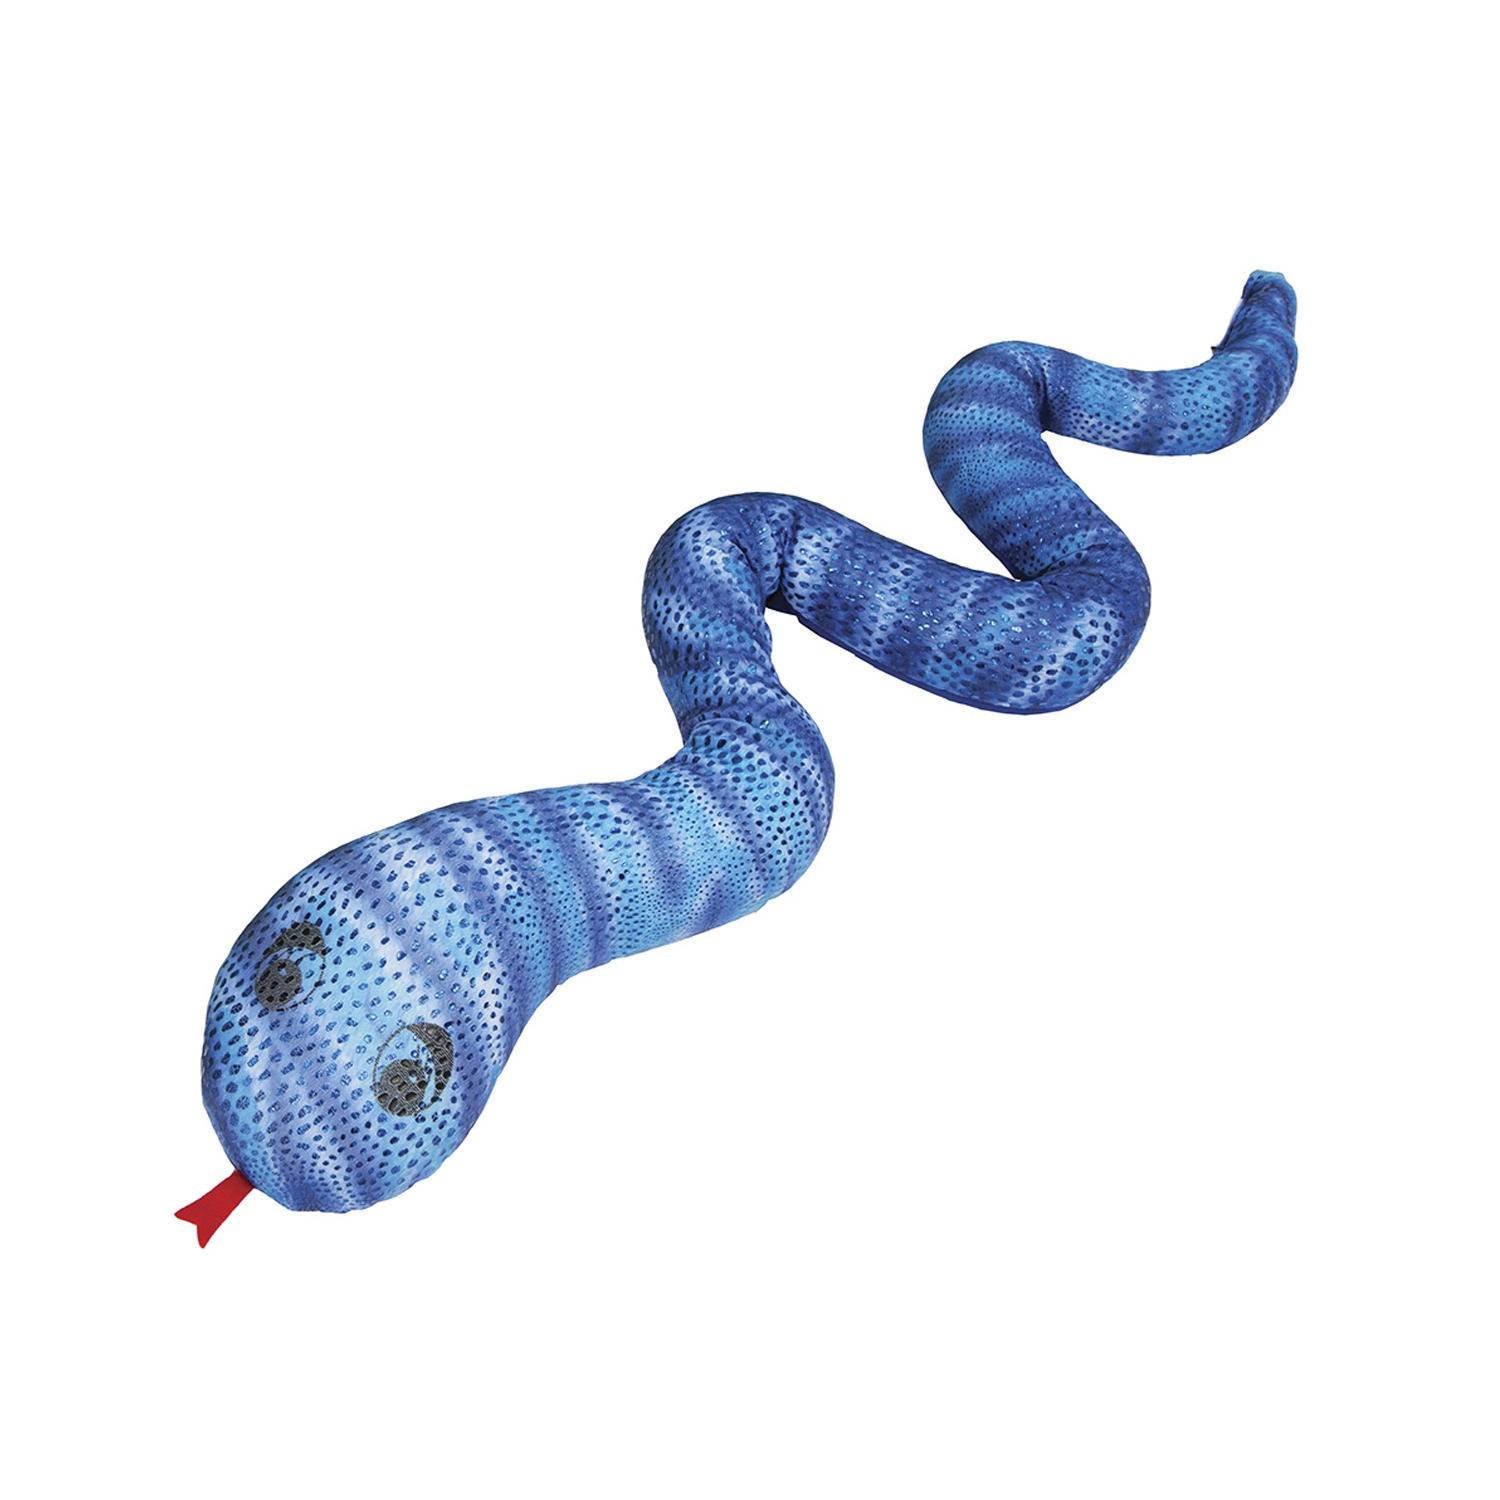 Про синюю змею. Голубая змея. Голубая змея игрушка. Бело голубая змея. Плюшевые змеи синие.